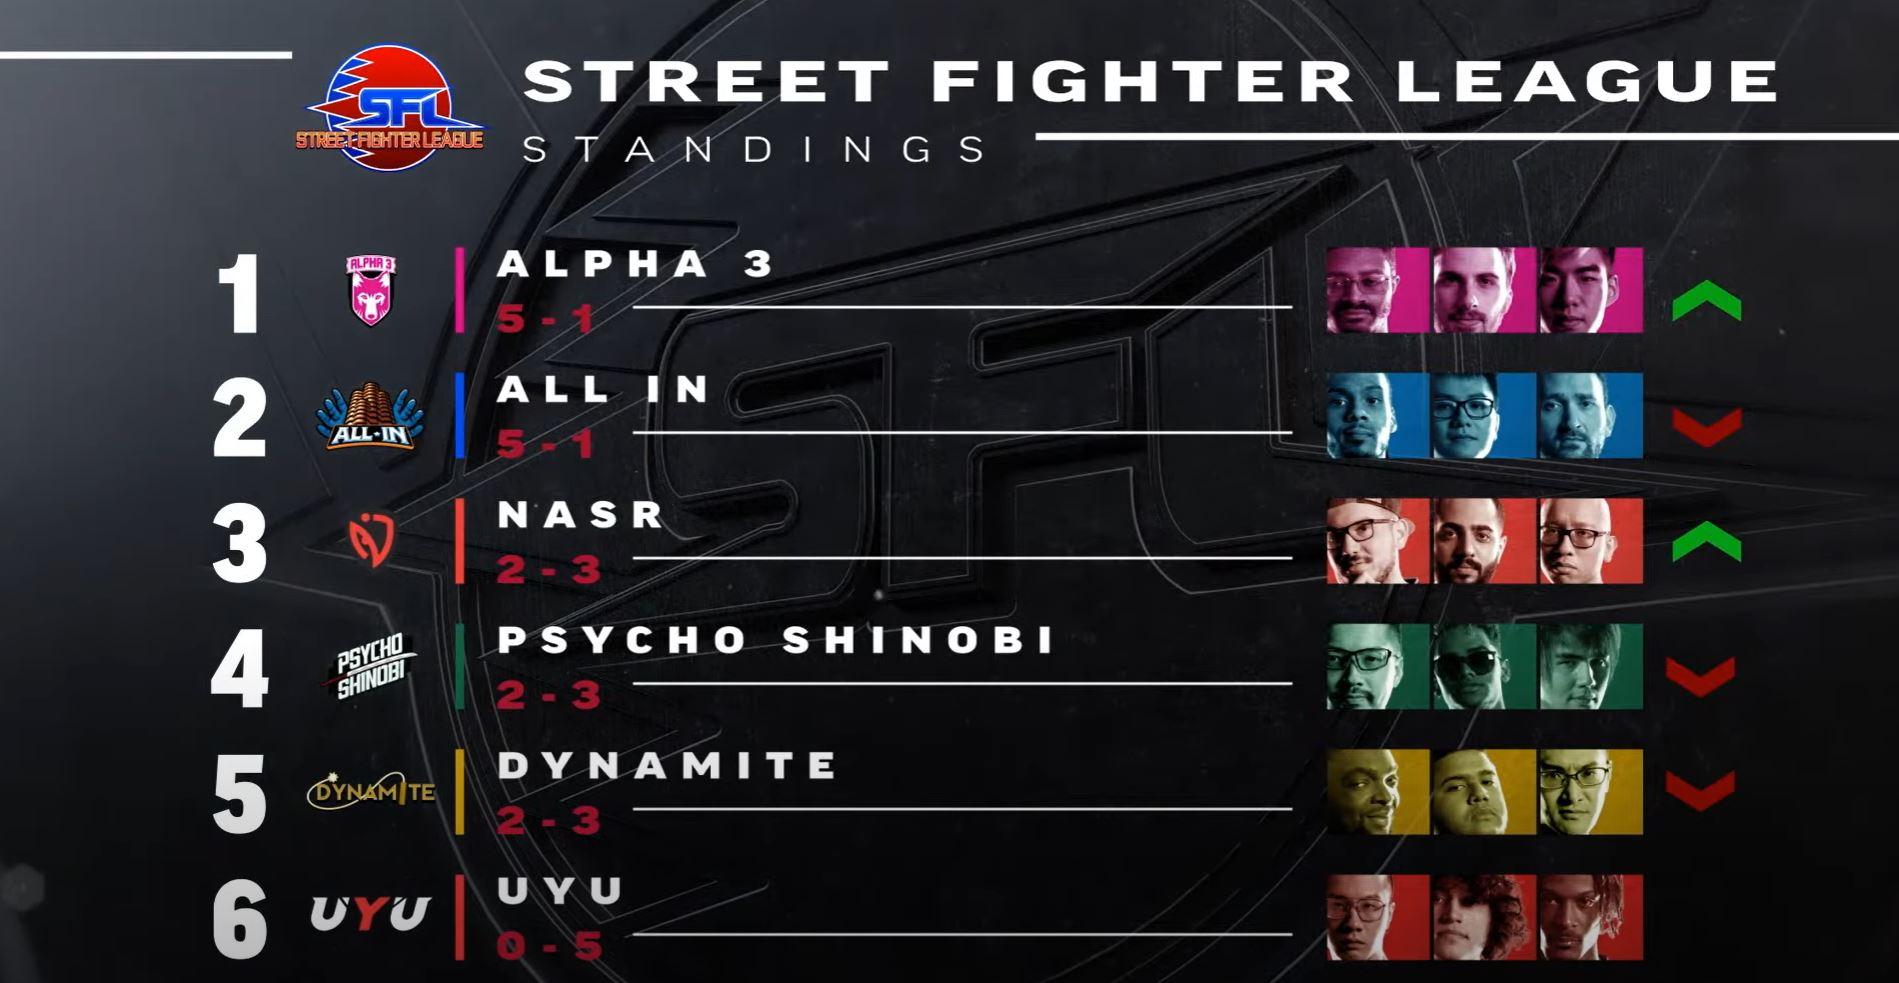 Street Fighter League team standings.